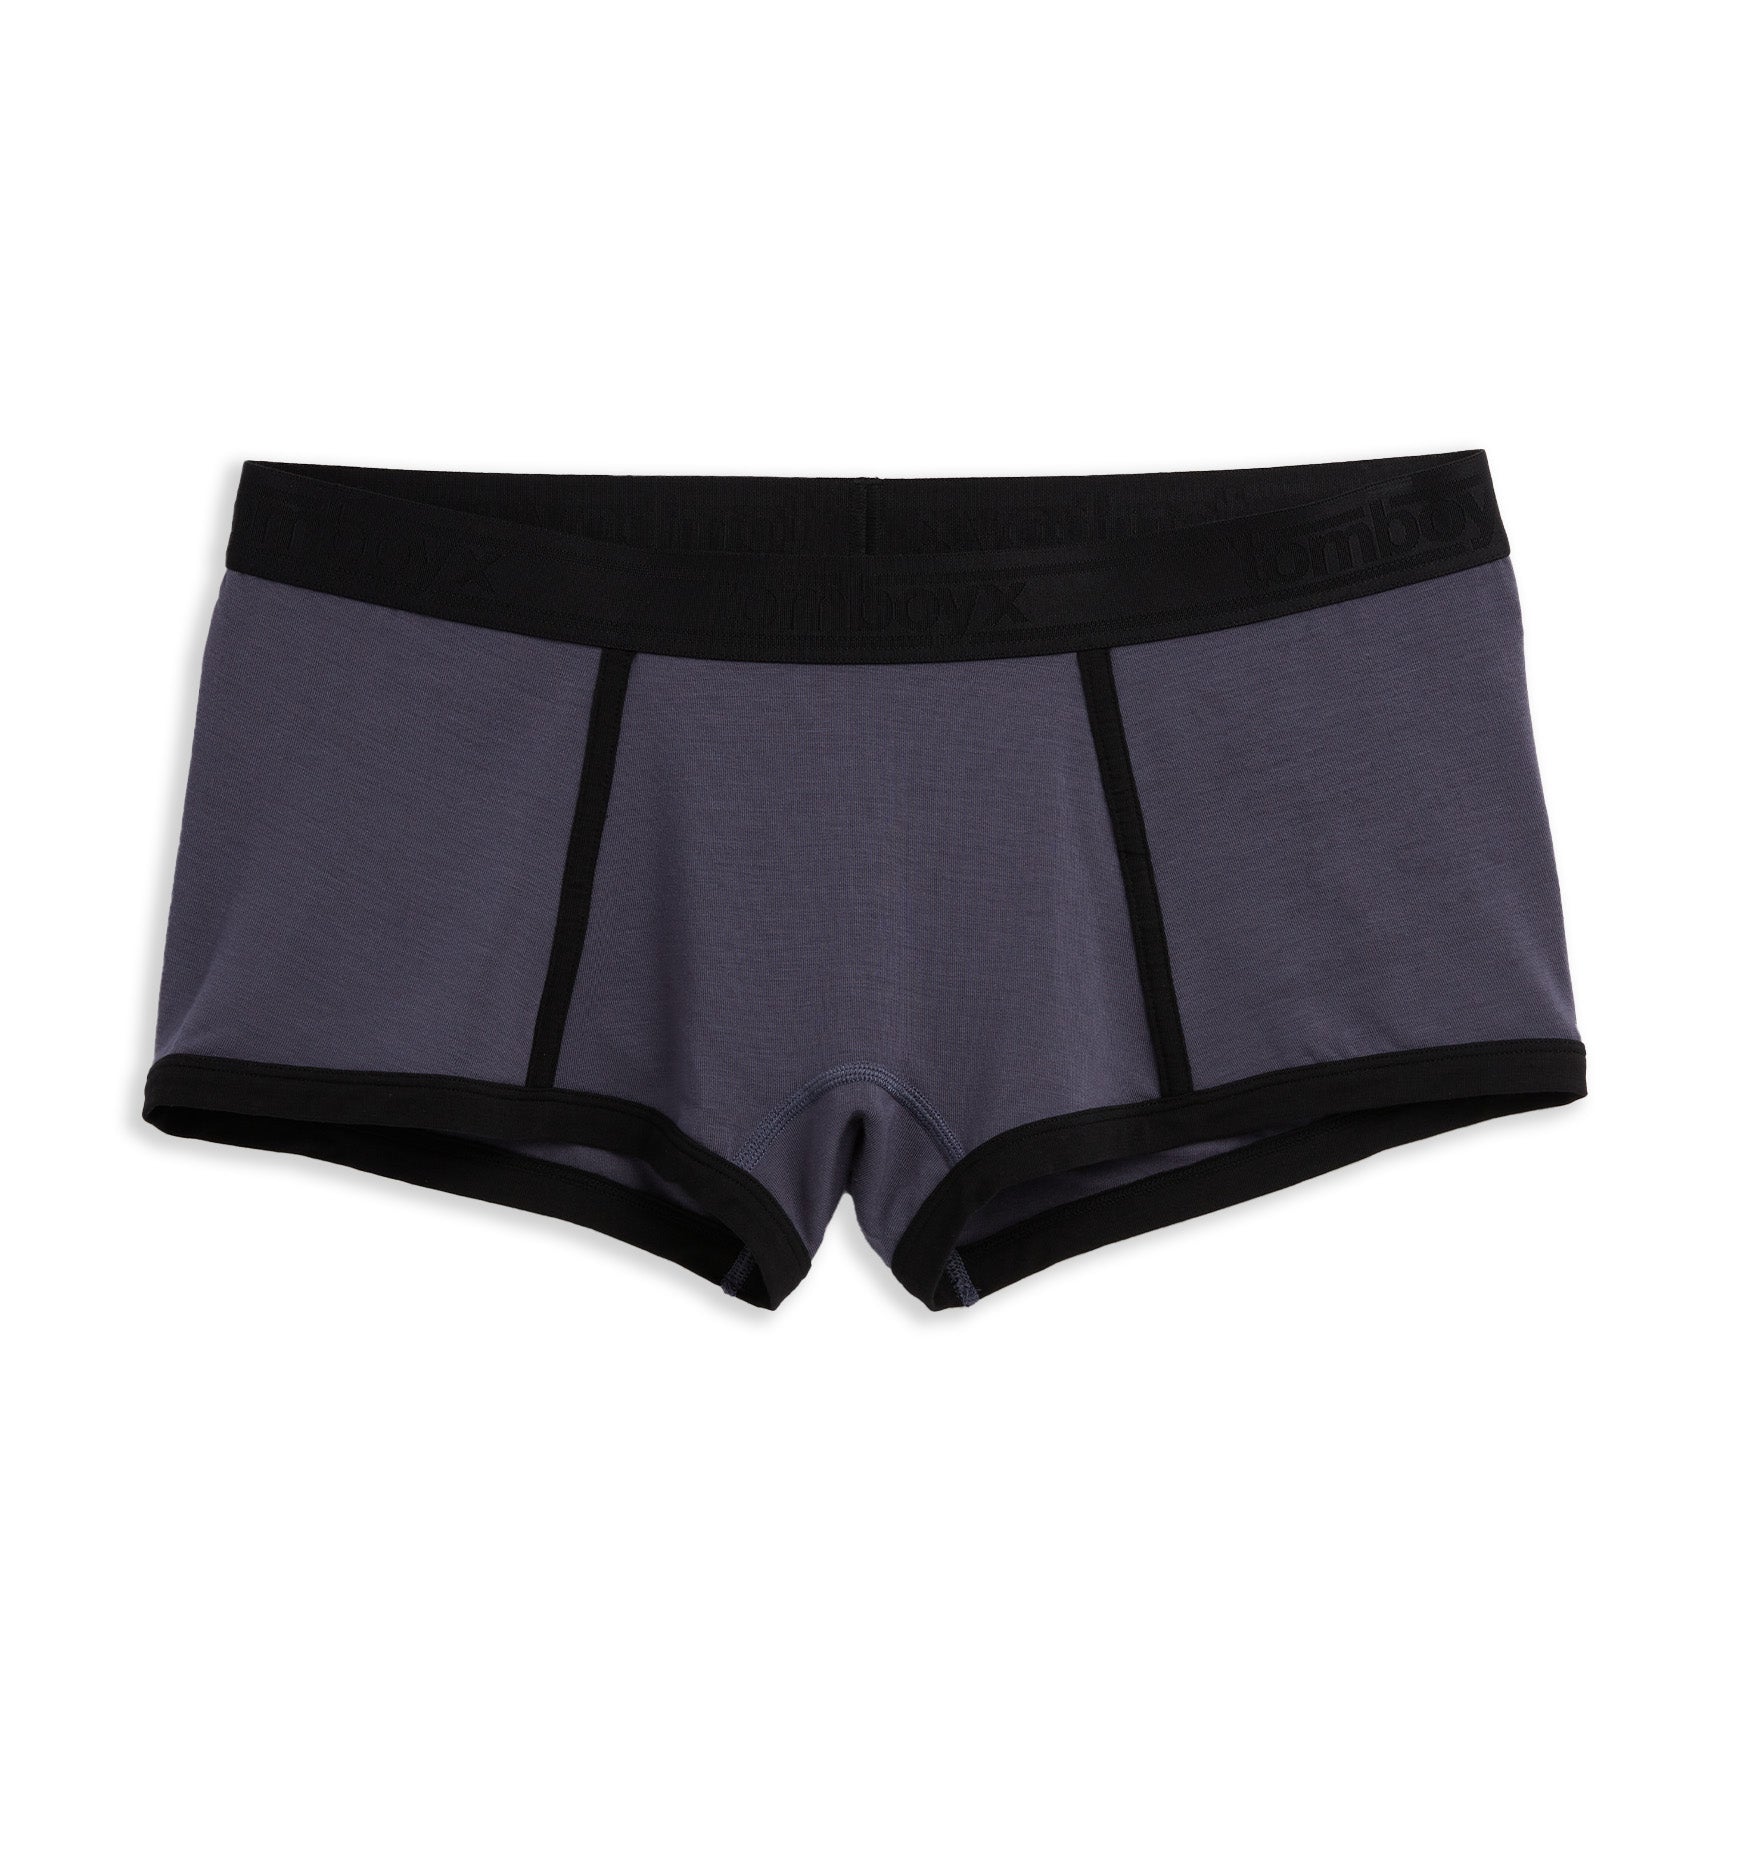 Tomboyx 9 Boxer Briefs Underwear, Modal Stretch Comfortable Boy Shorts,  Bike Short Style, (xs-4x) Black Rainbow Small : Target